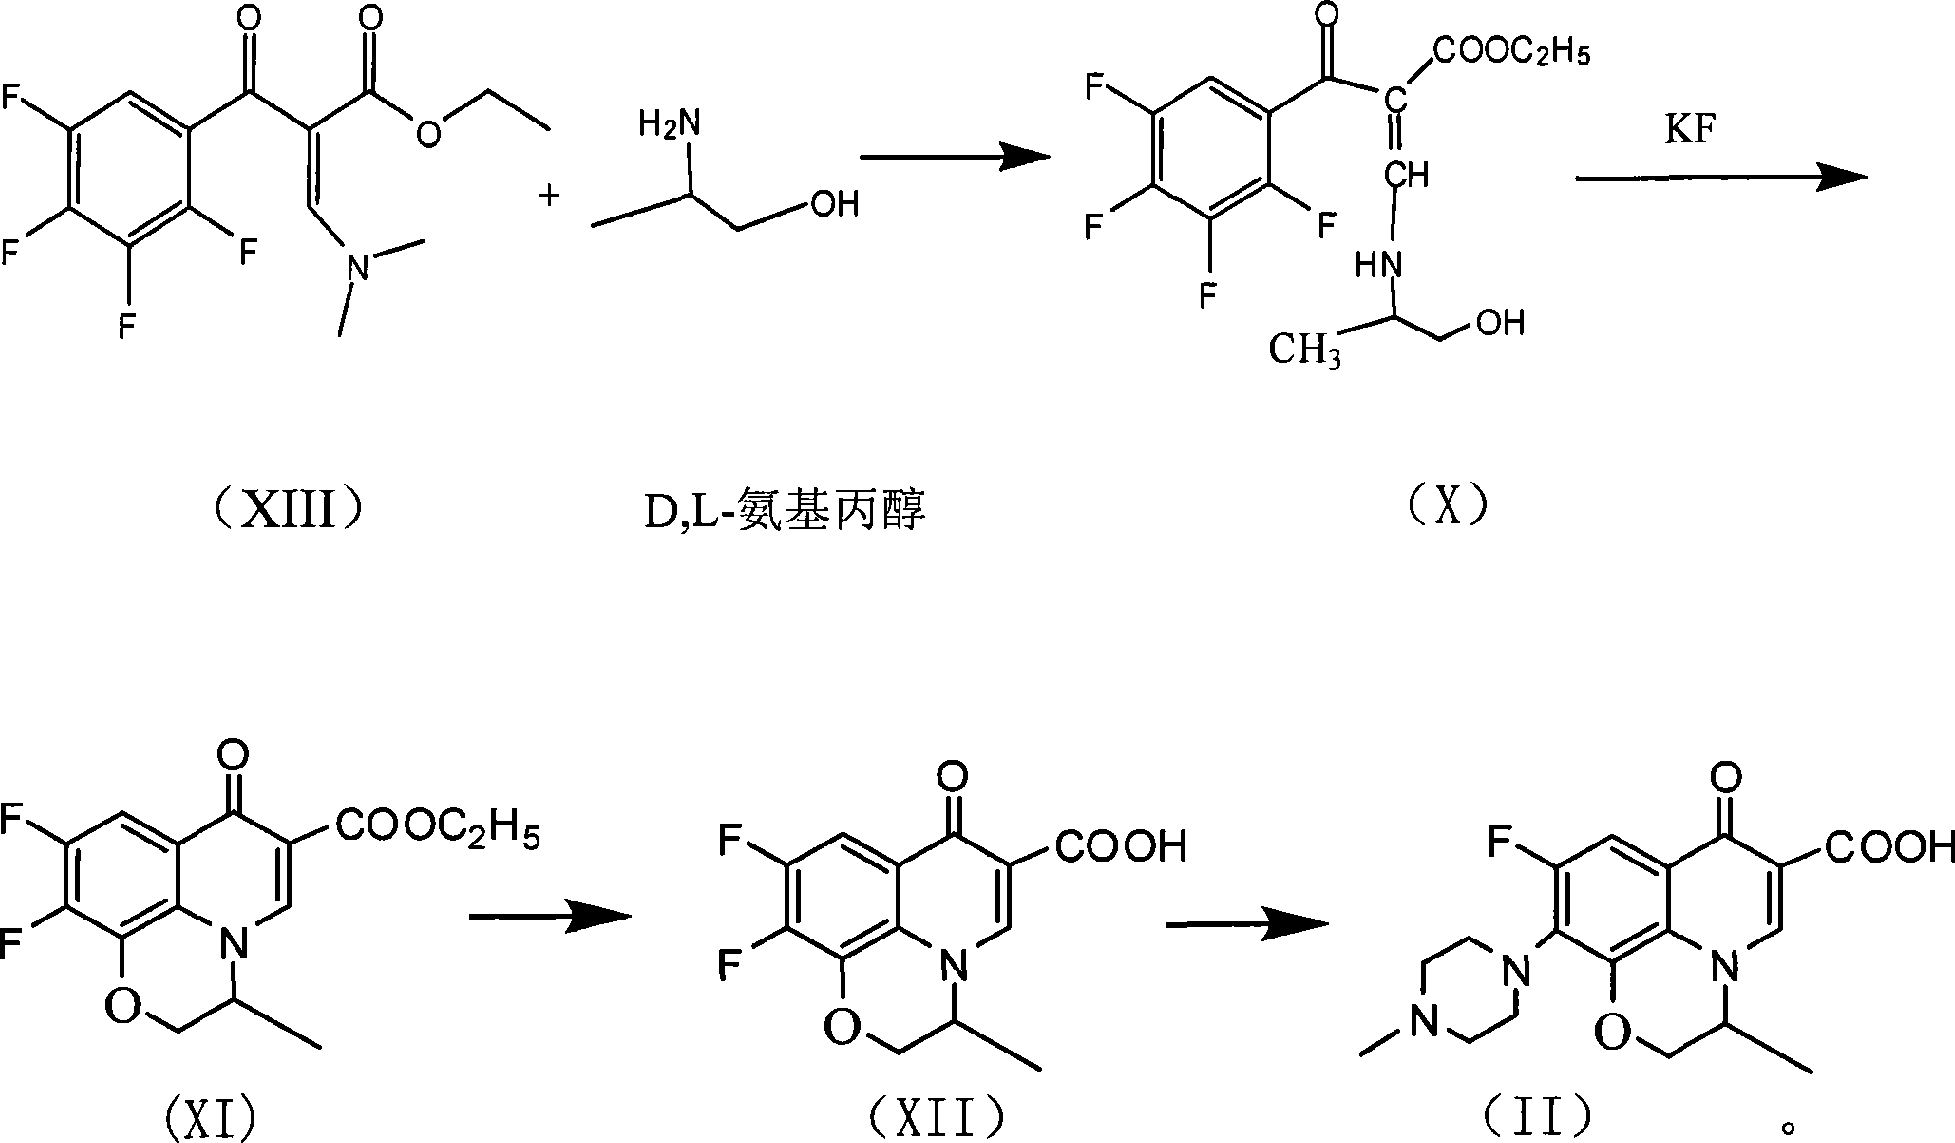 Preparation process of lavo-ofloxacin and ofloxacin